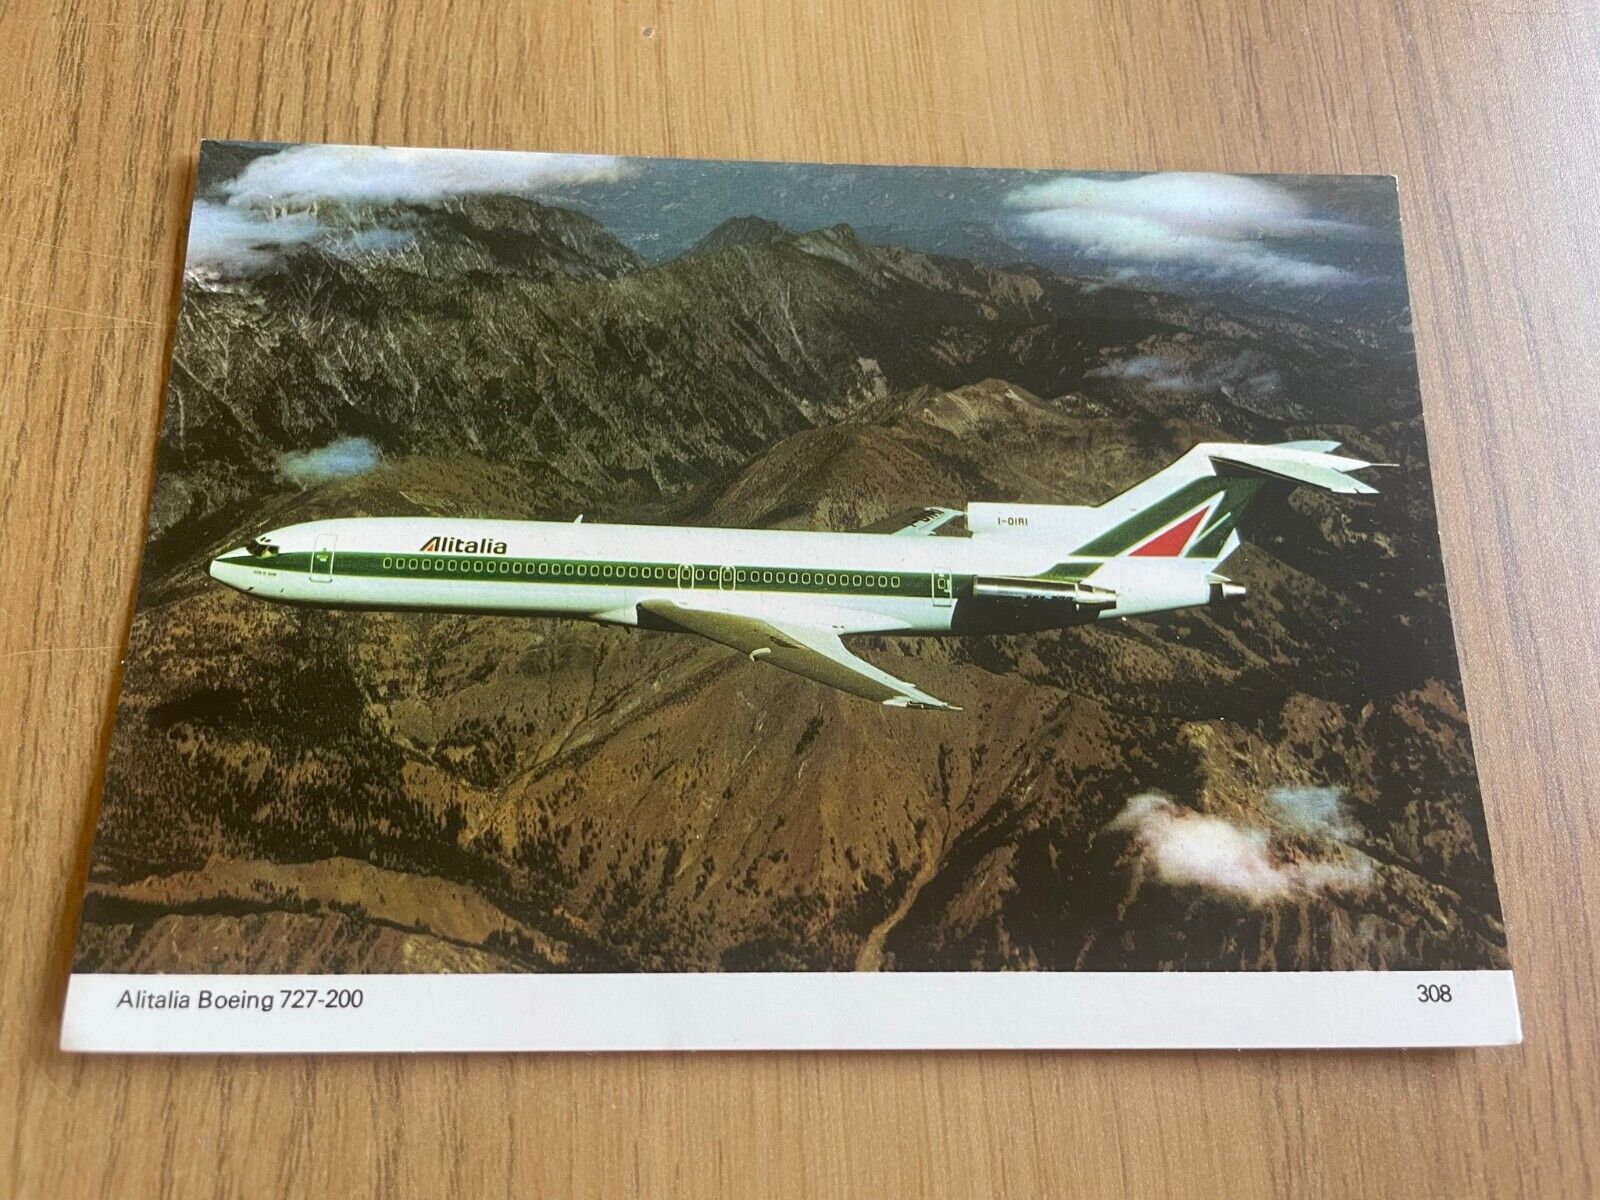 Alitalia Boeing 727-200 aircraft postcard